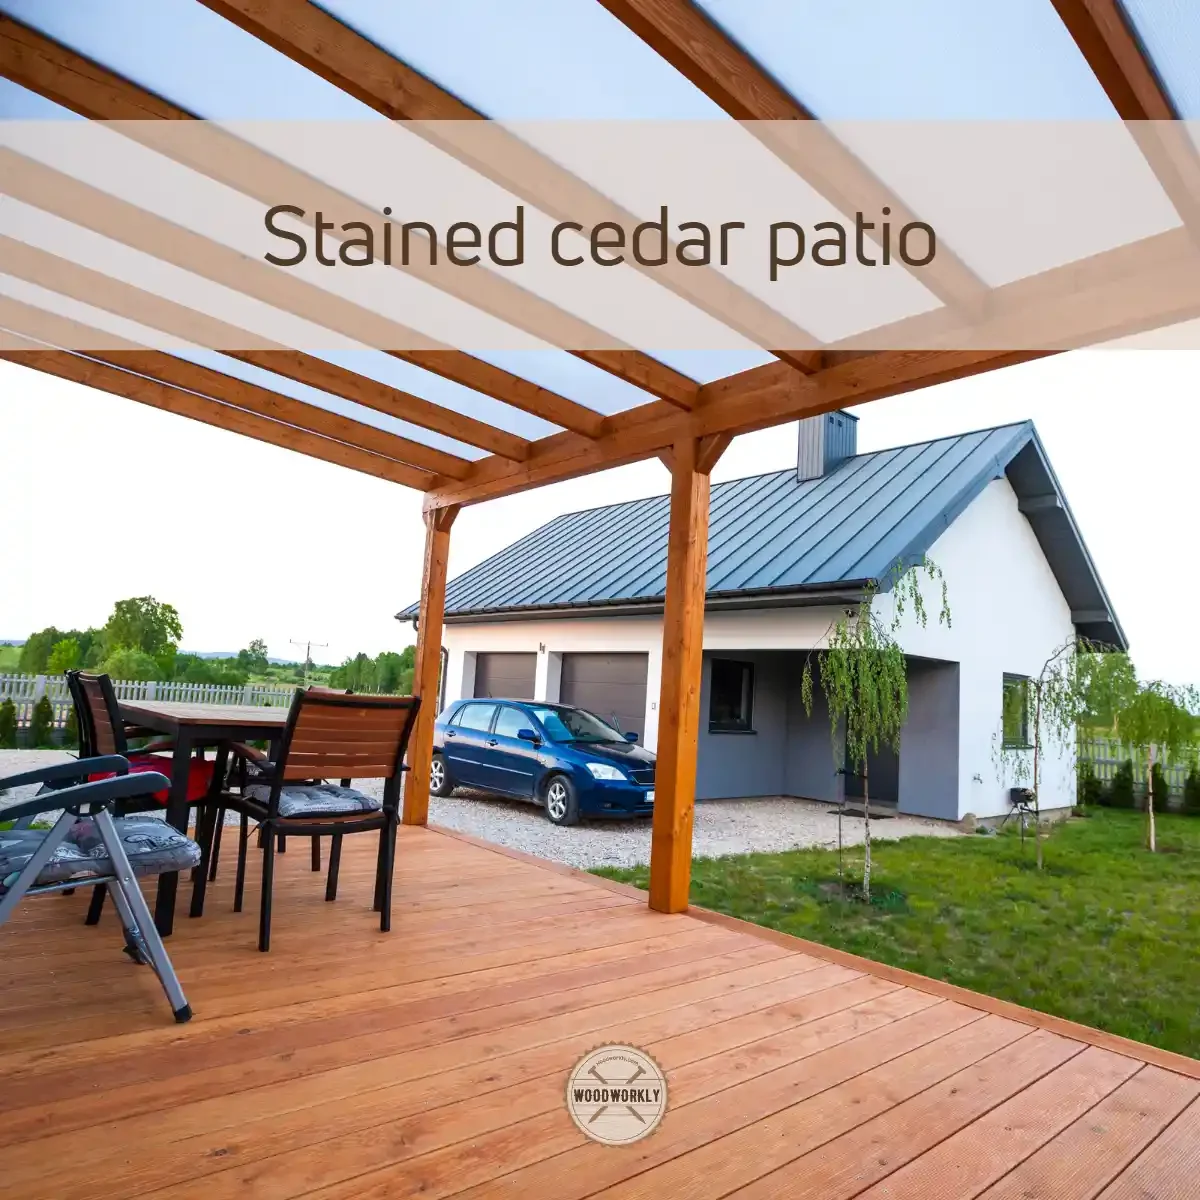 Stained cedar patio